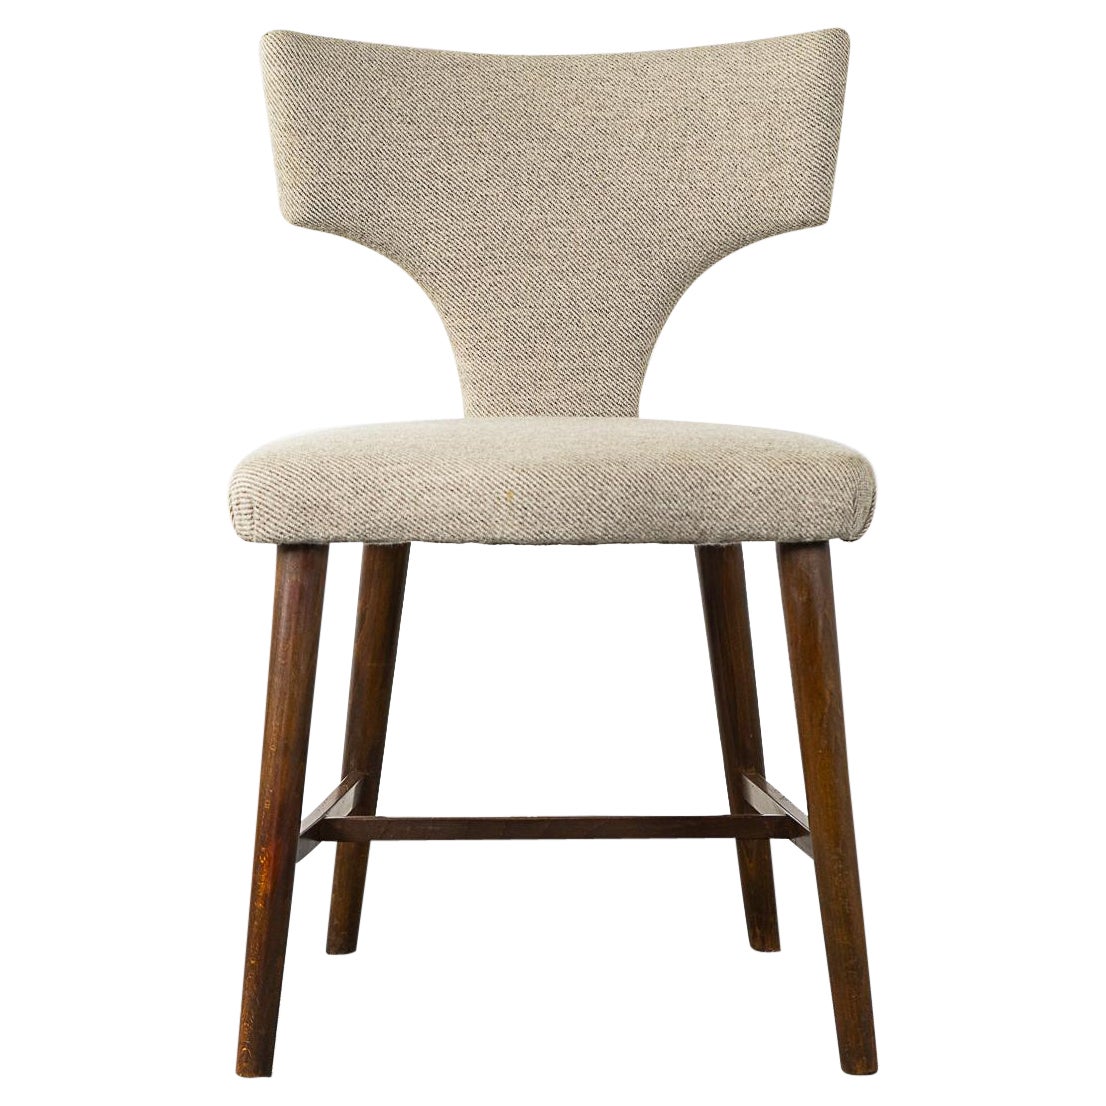  Danish Mid-Century Chair  For Sale